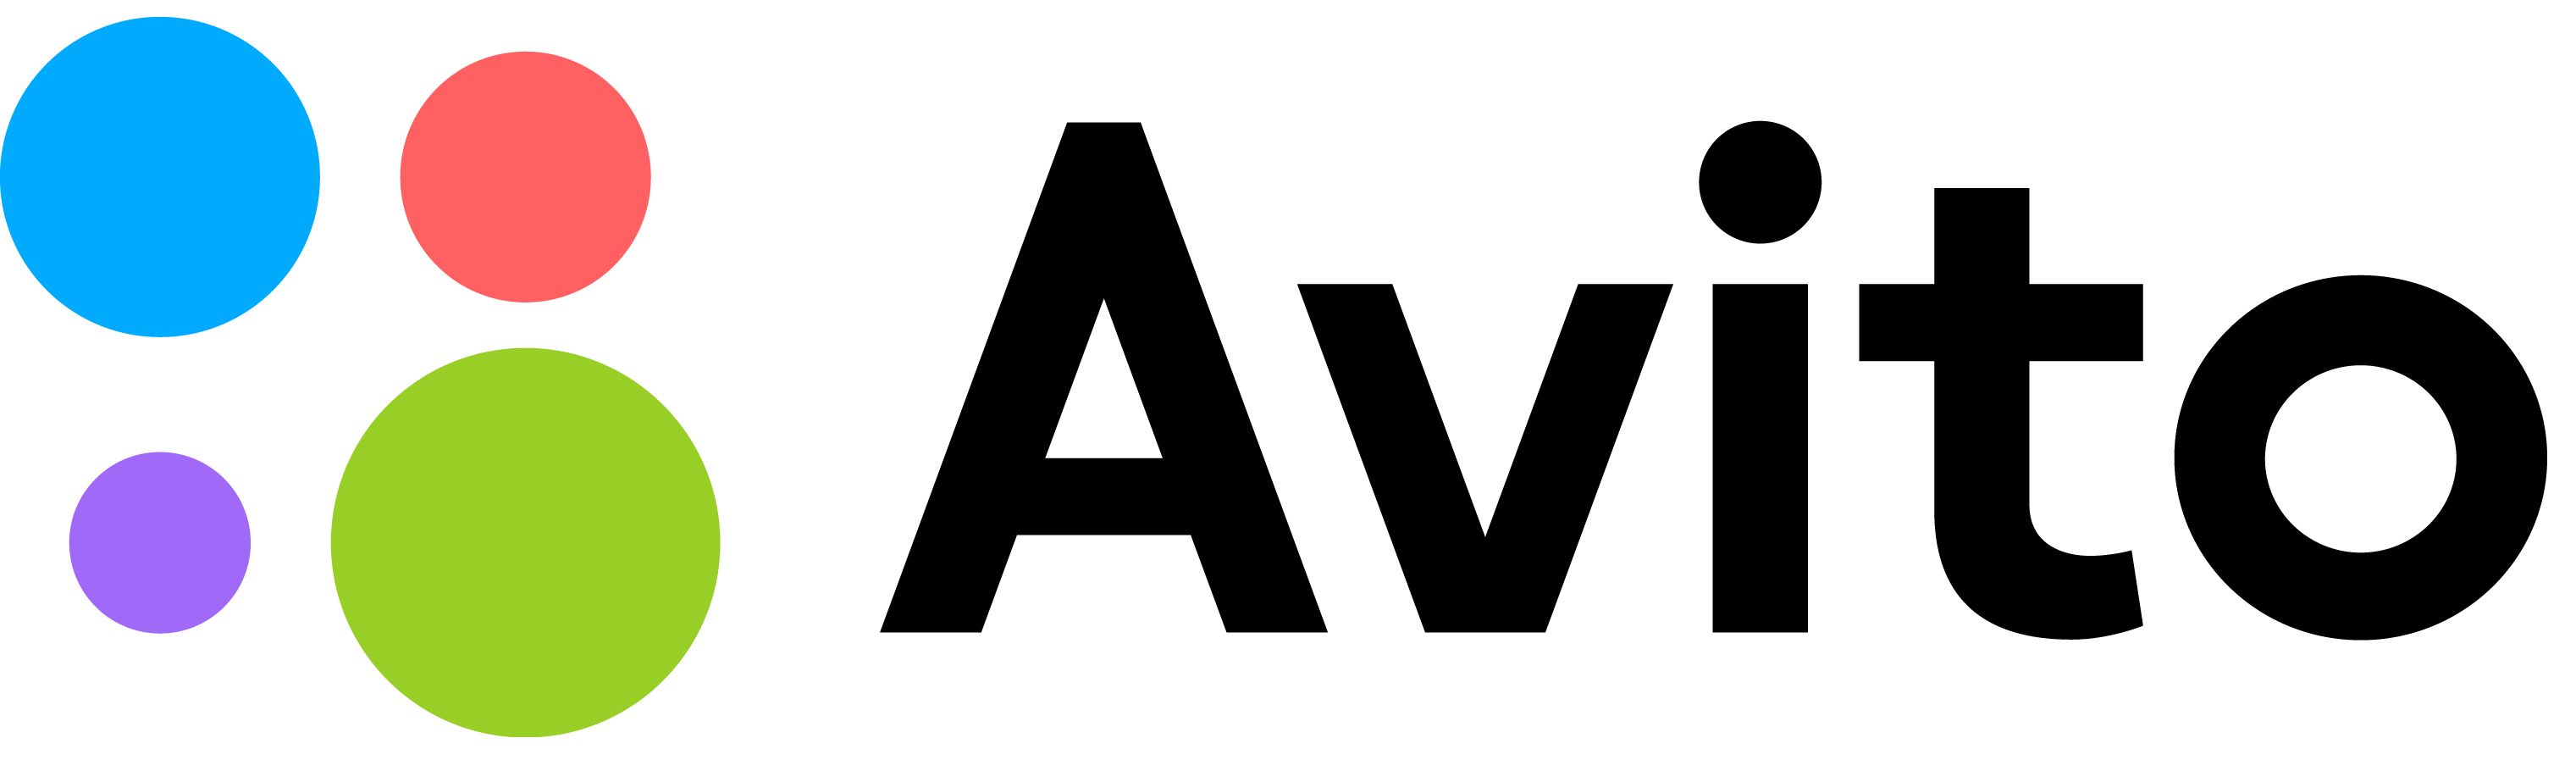 Www pent ru. Avito логотип. Логотип авито на прозрачном фоне. Авито маркетплейс. Авито картинка.